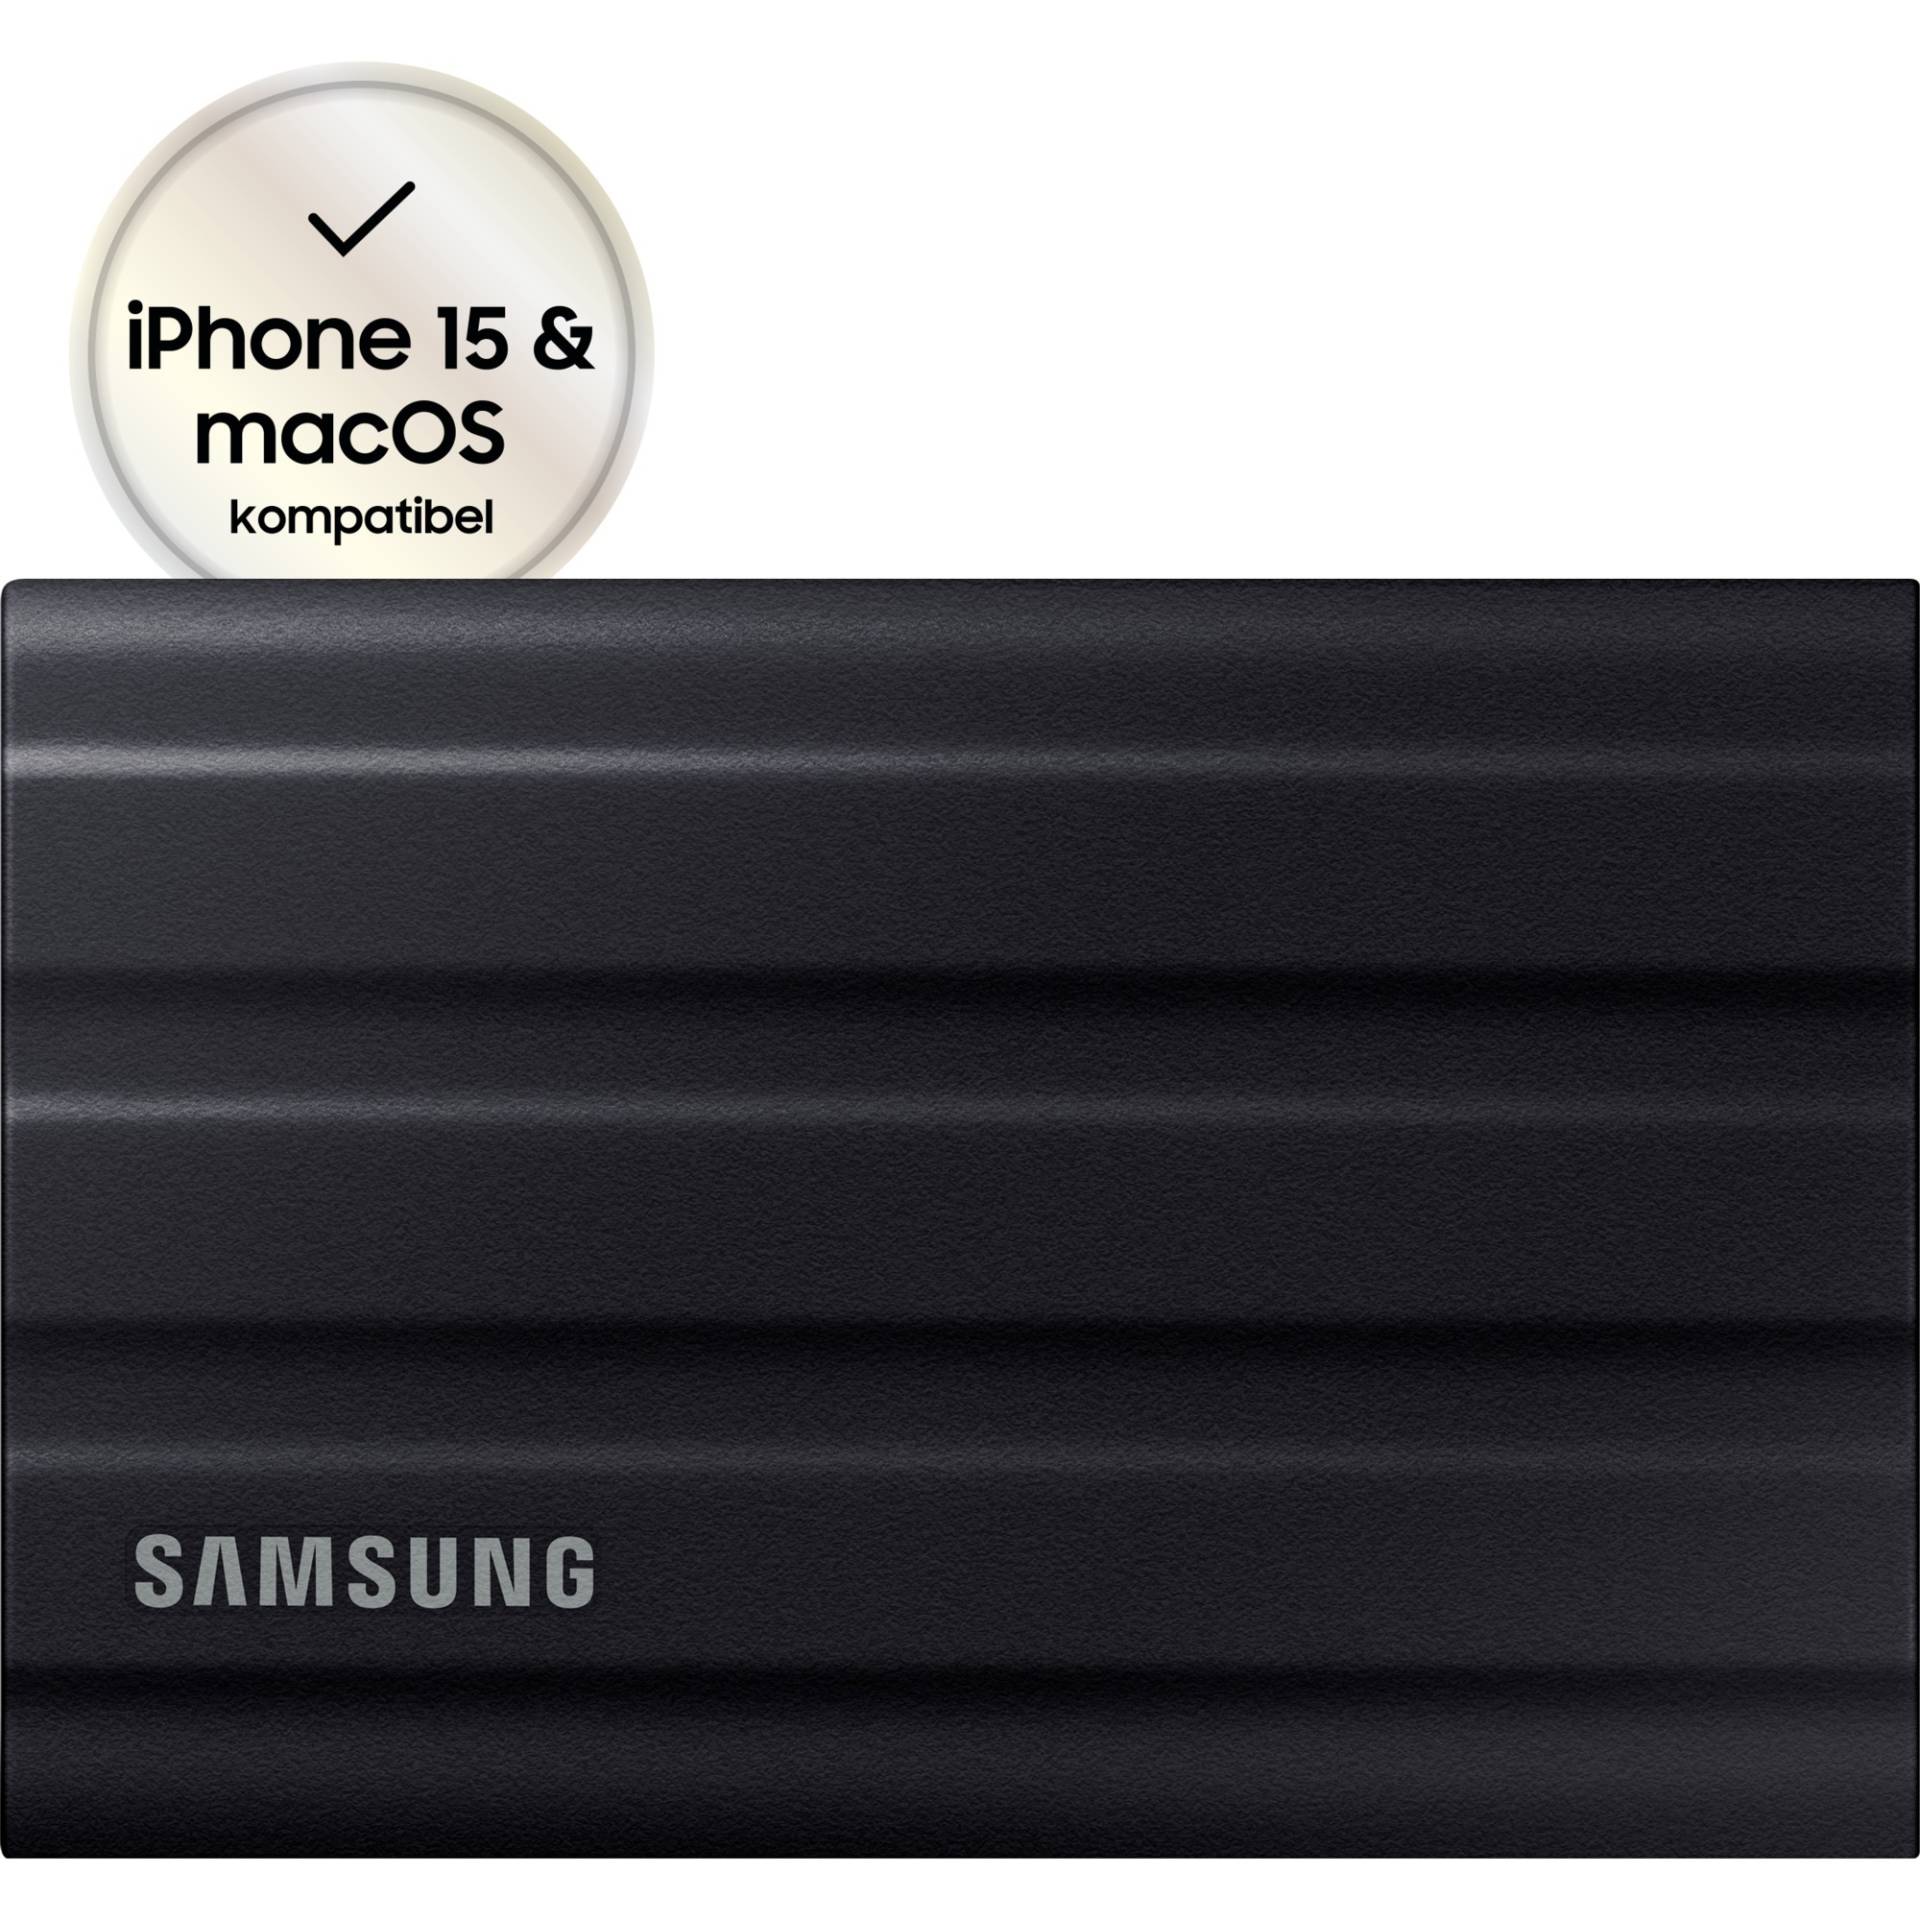 Portable SSD T7 Shield 1 TB, Externe SSD von Samsung